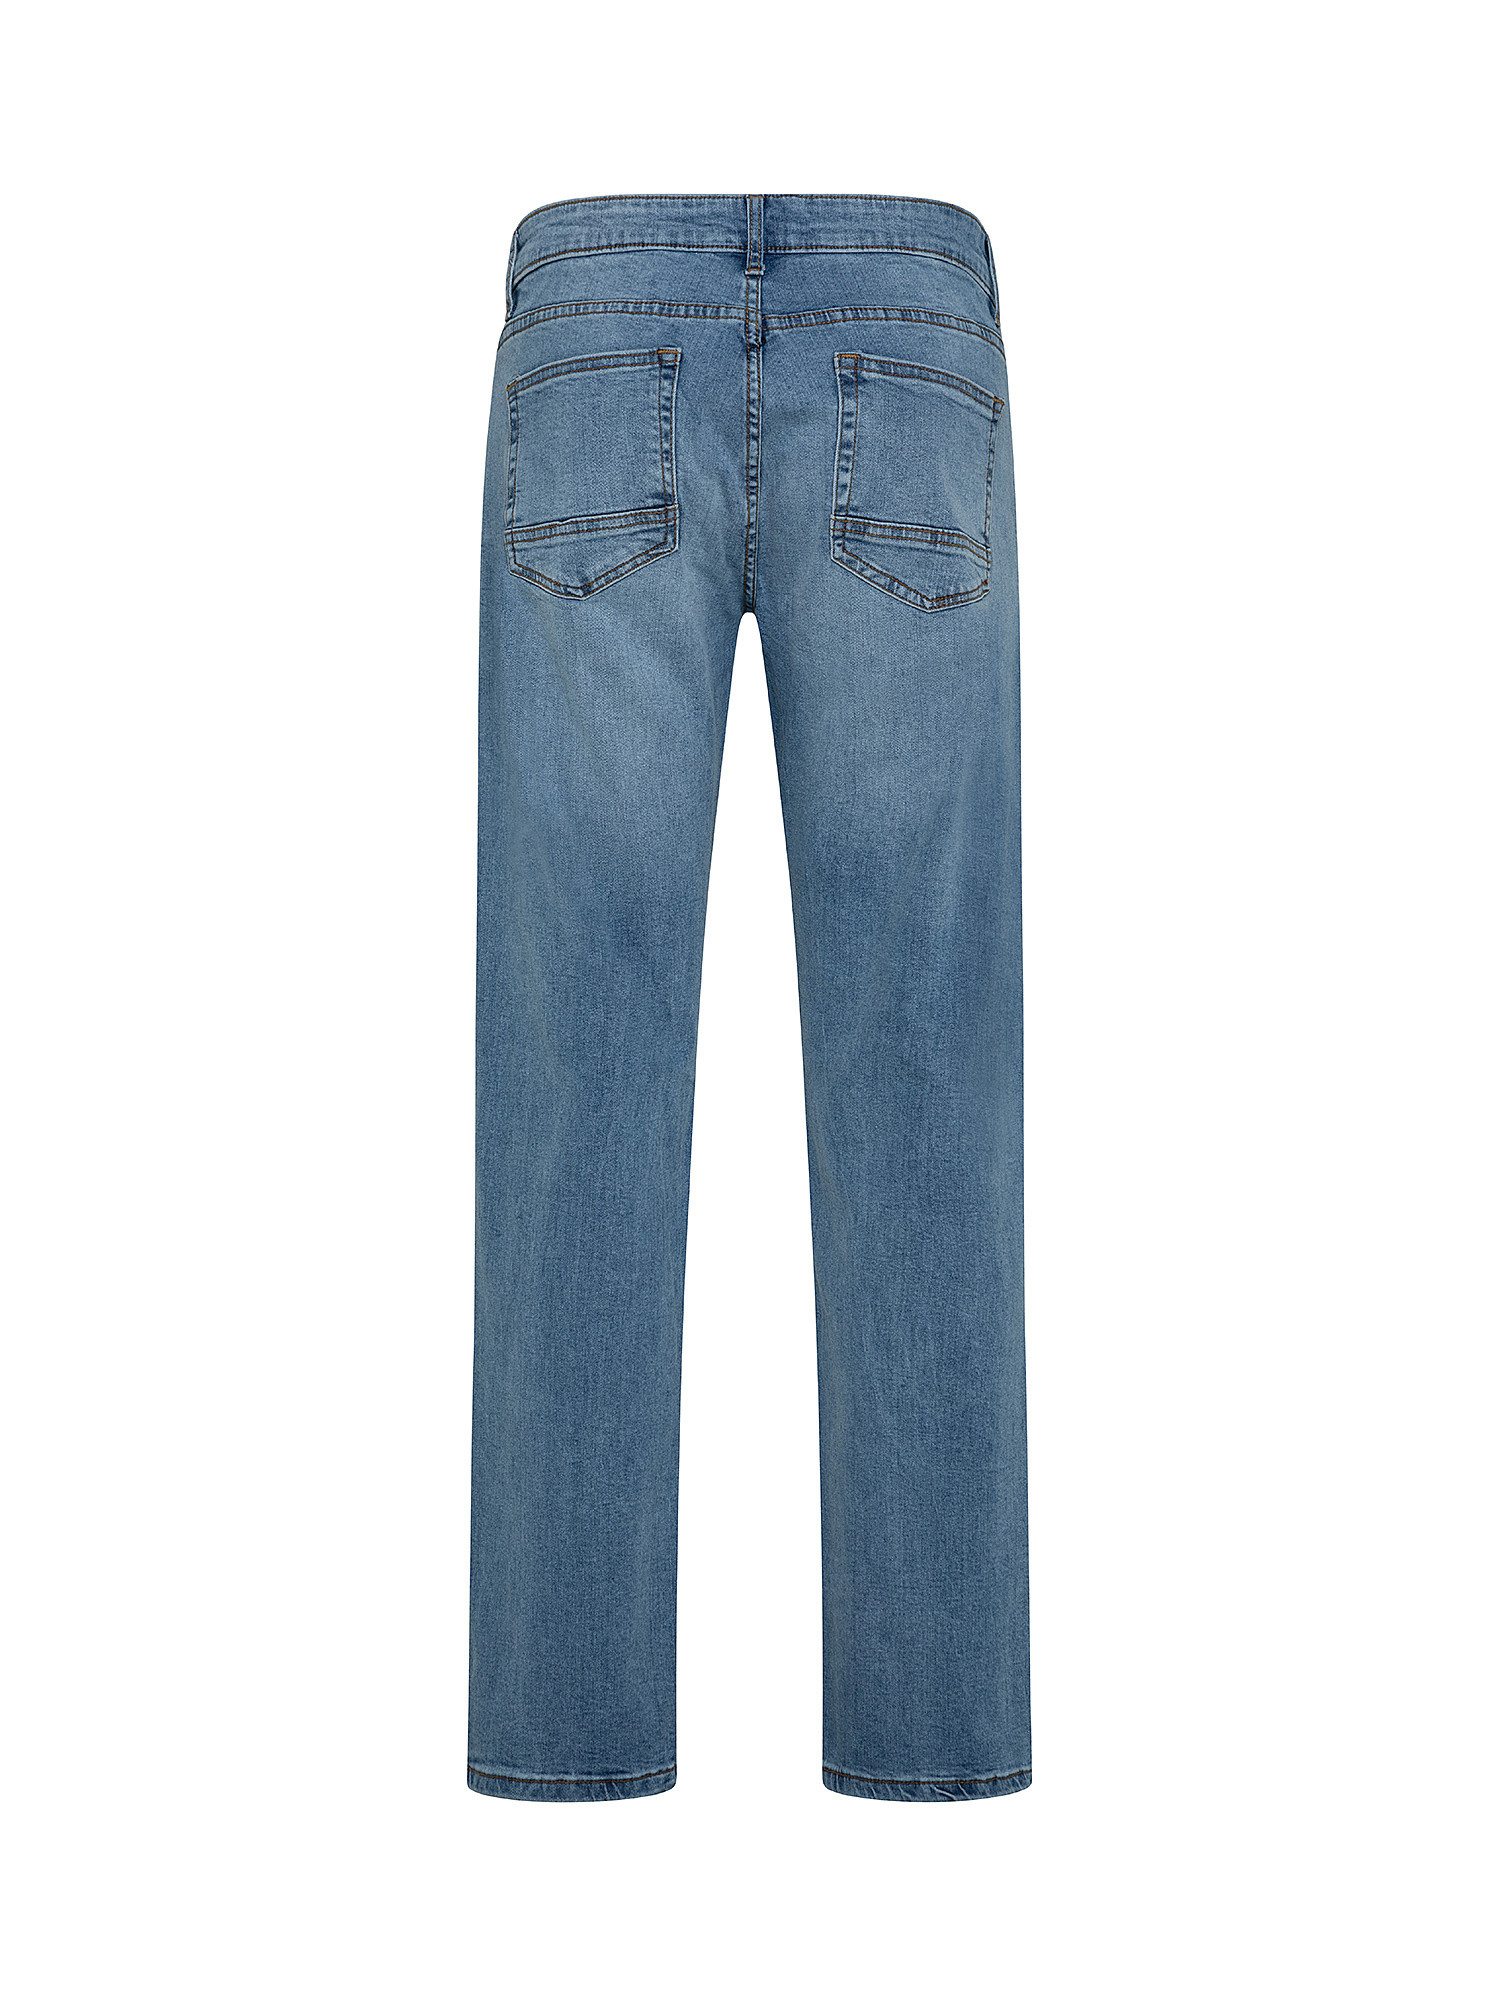 Jeans 5 tasche slim cotone stretch, Blu chiaro, large image number 1